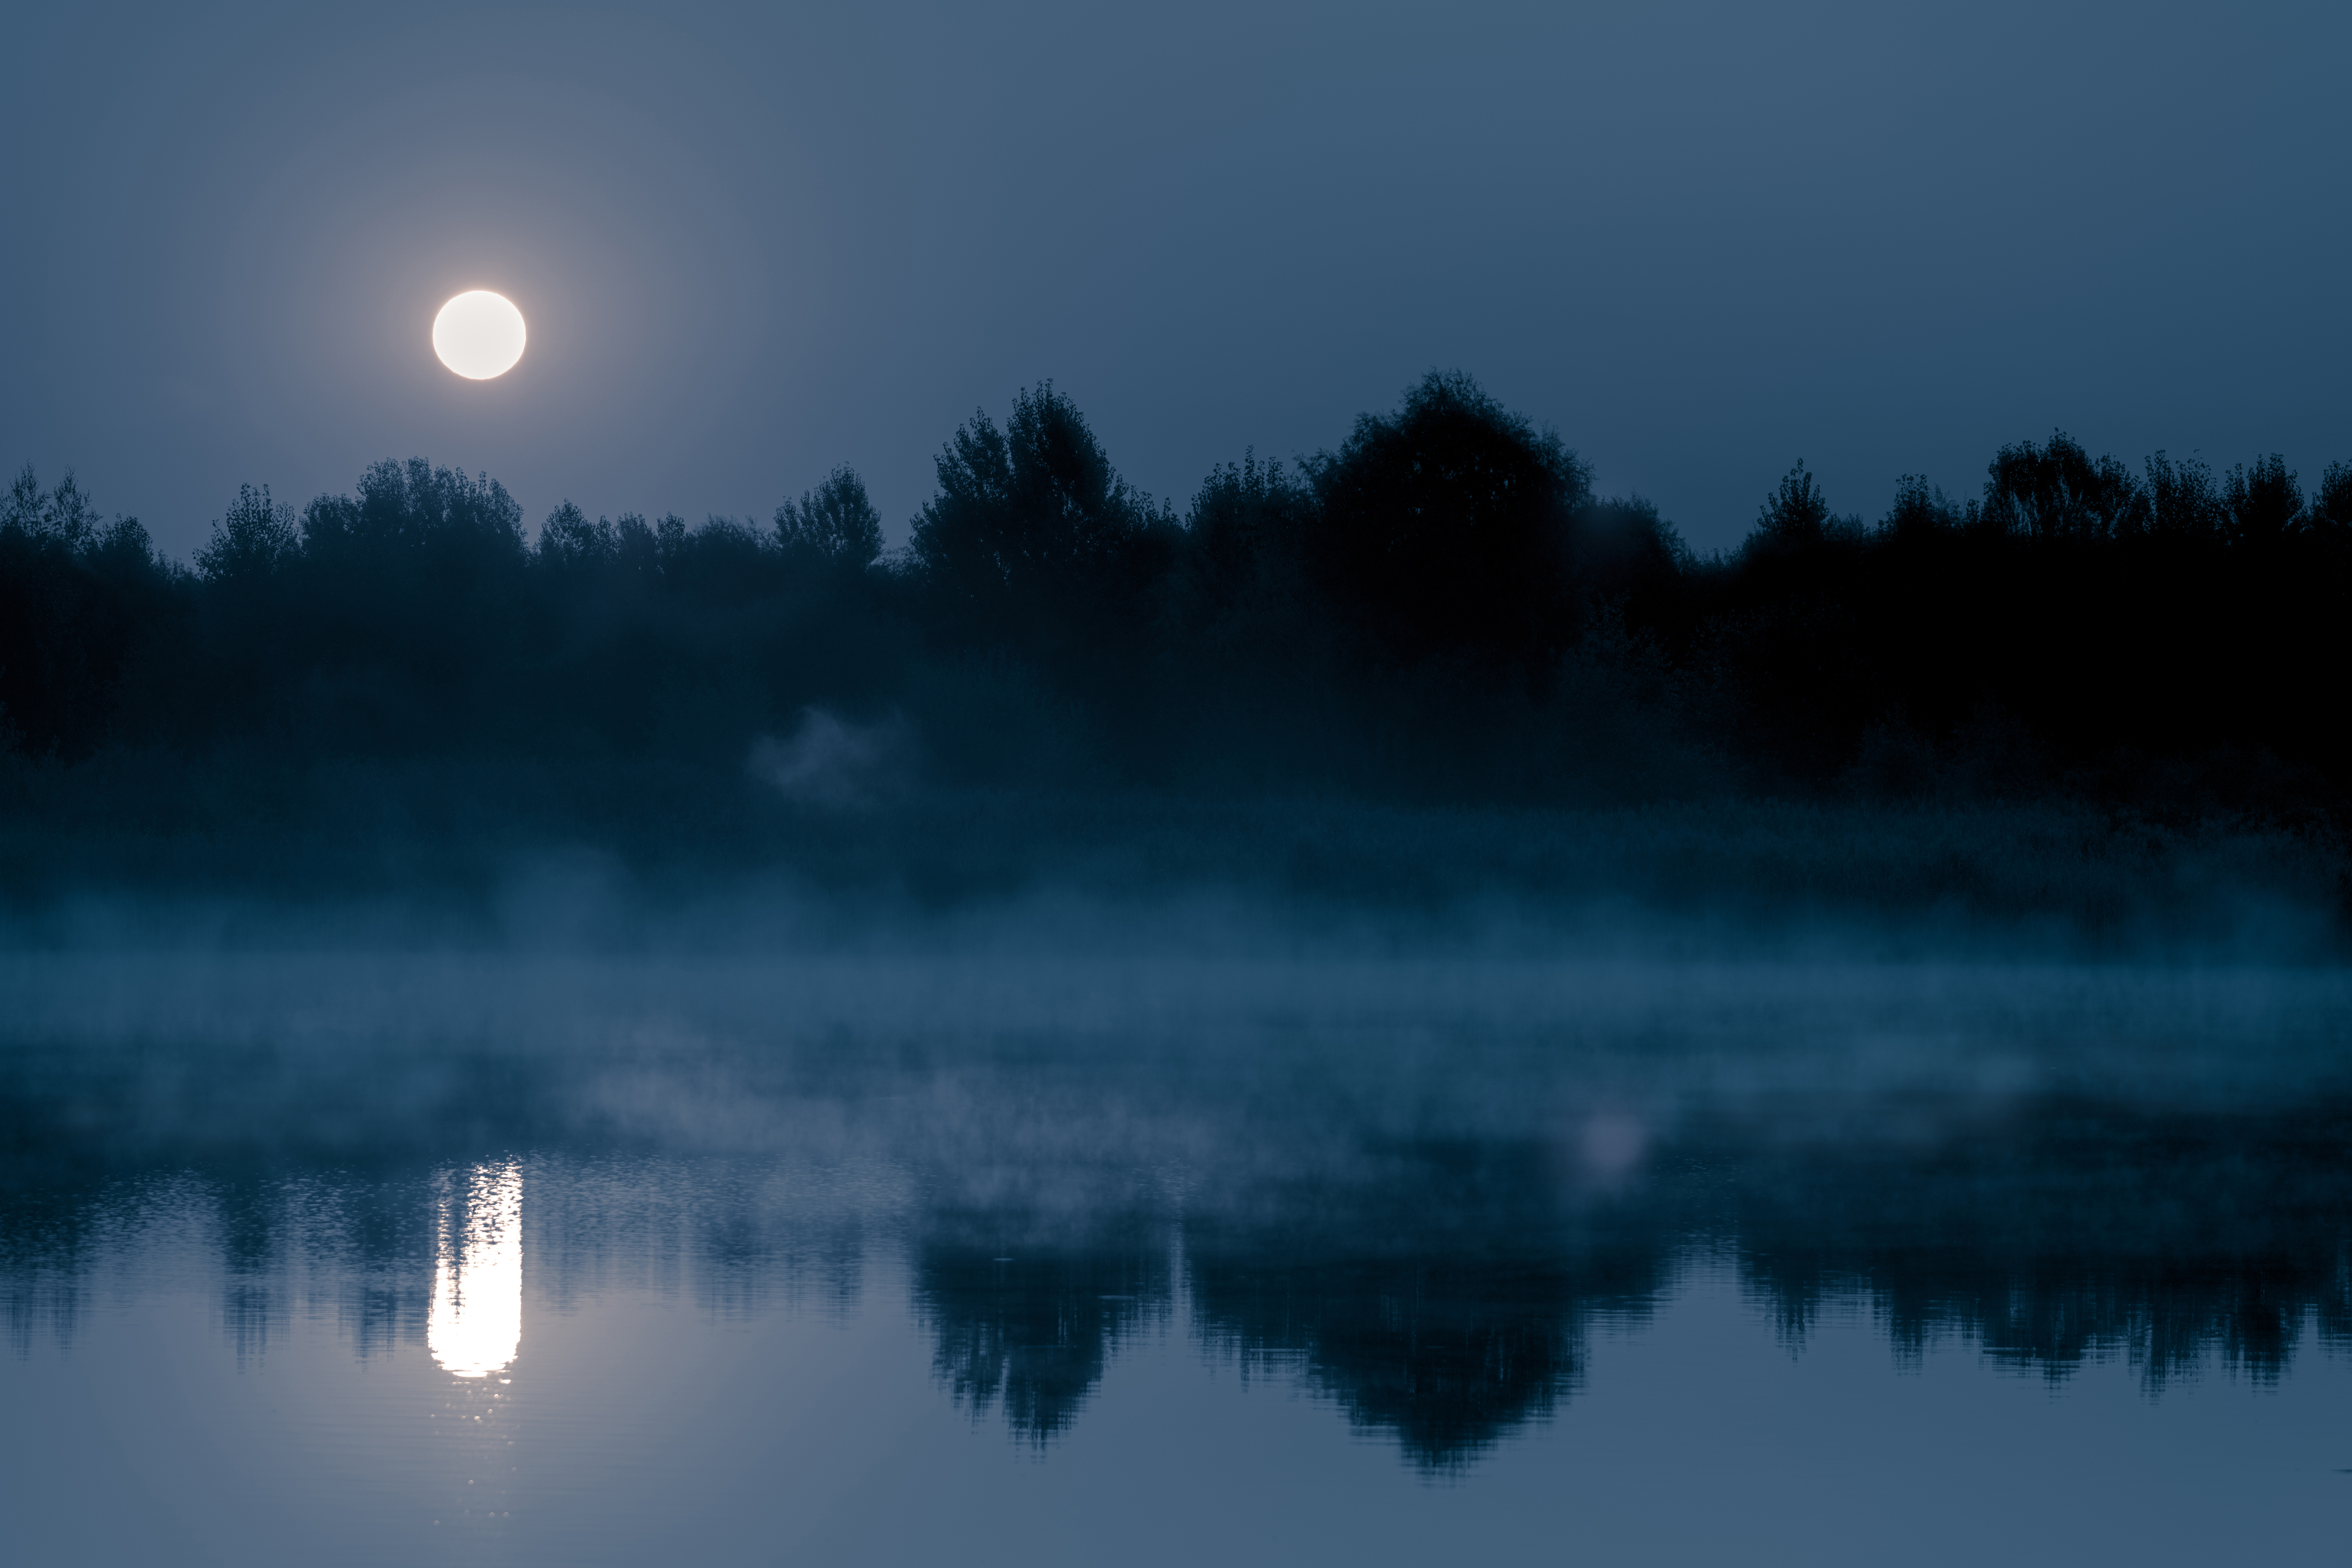 Night mystical scenery | Source: Shutterstock